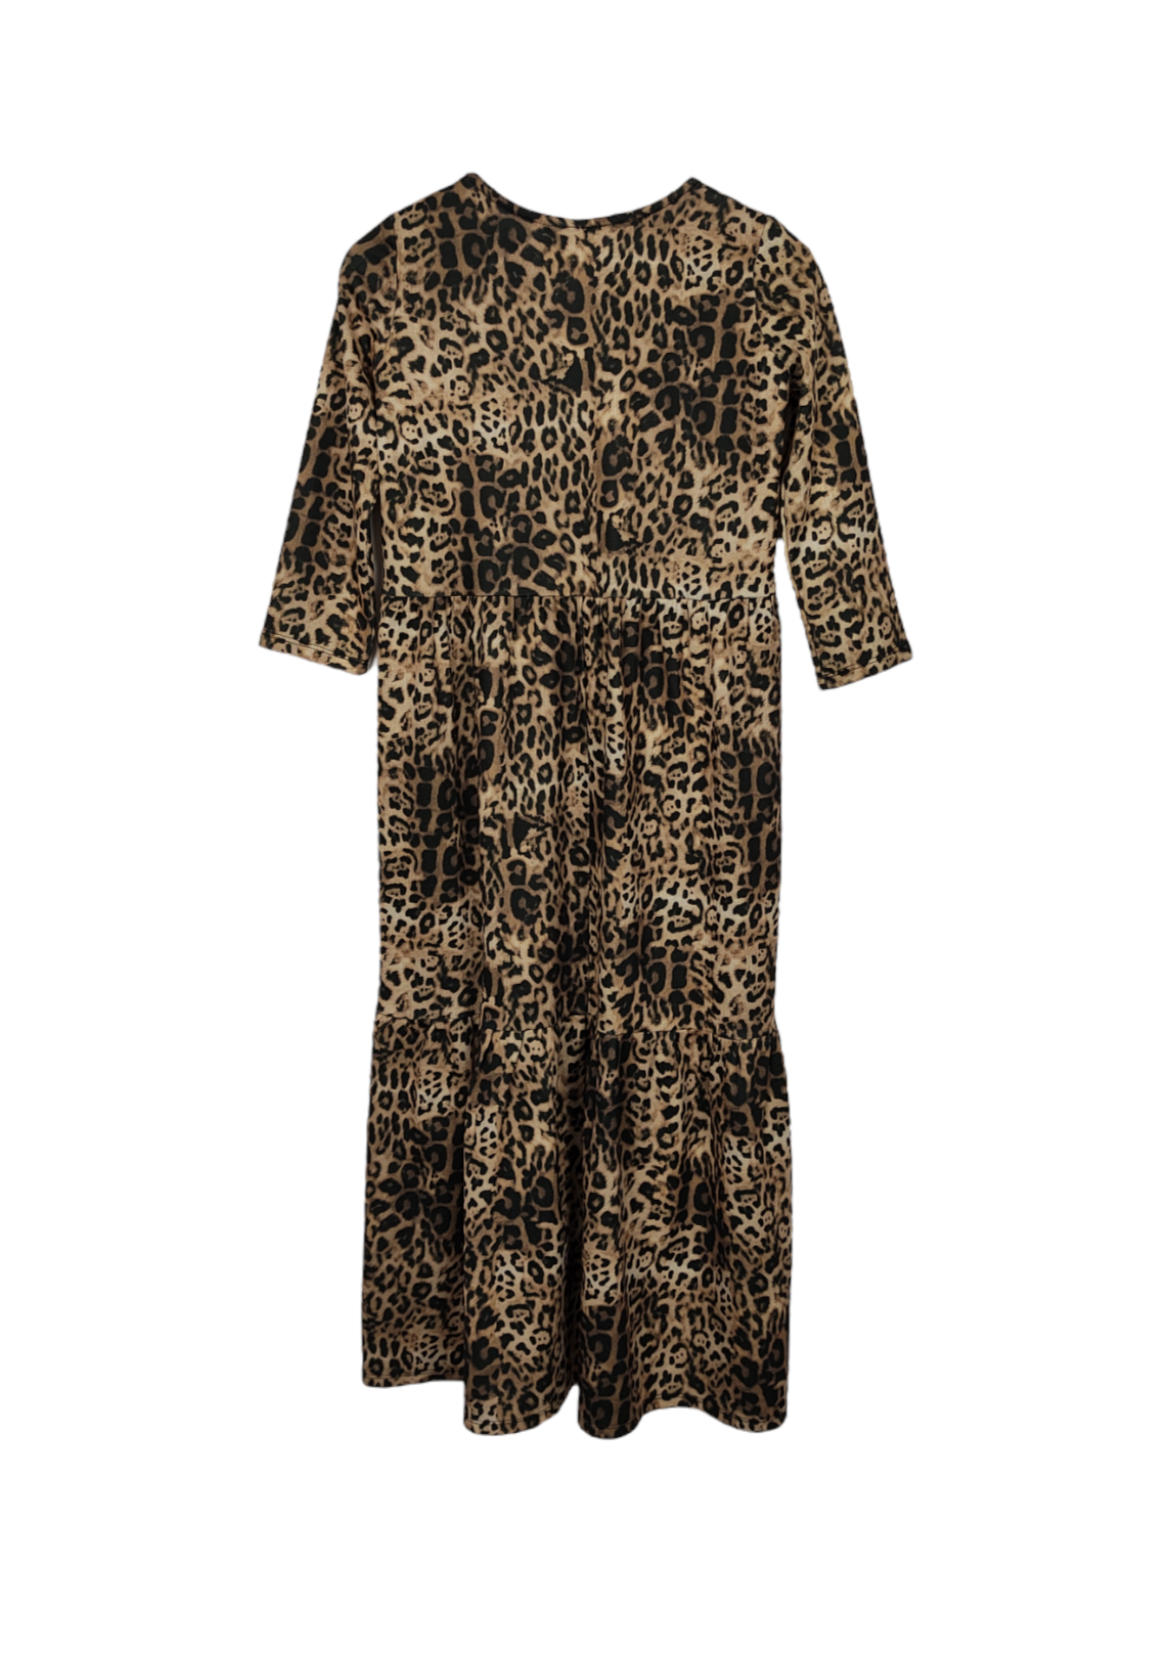 Stock, Animal Print Φόρεμα RIVER ISLAND σε Καφέ χρώματα (XS)